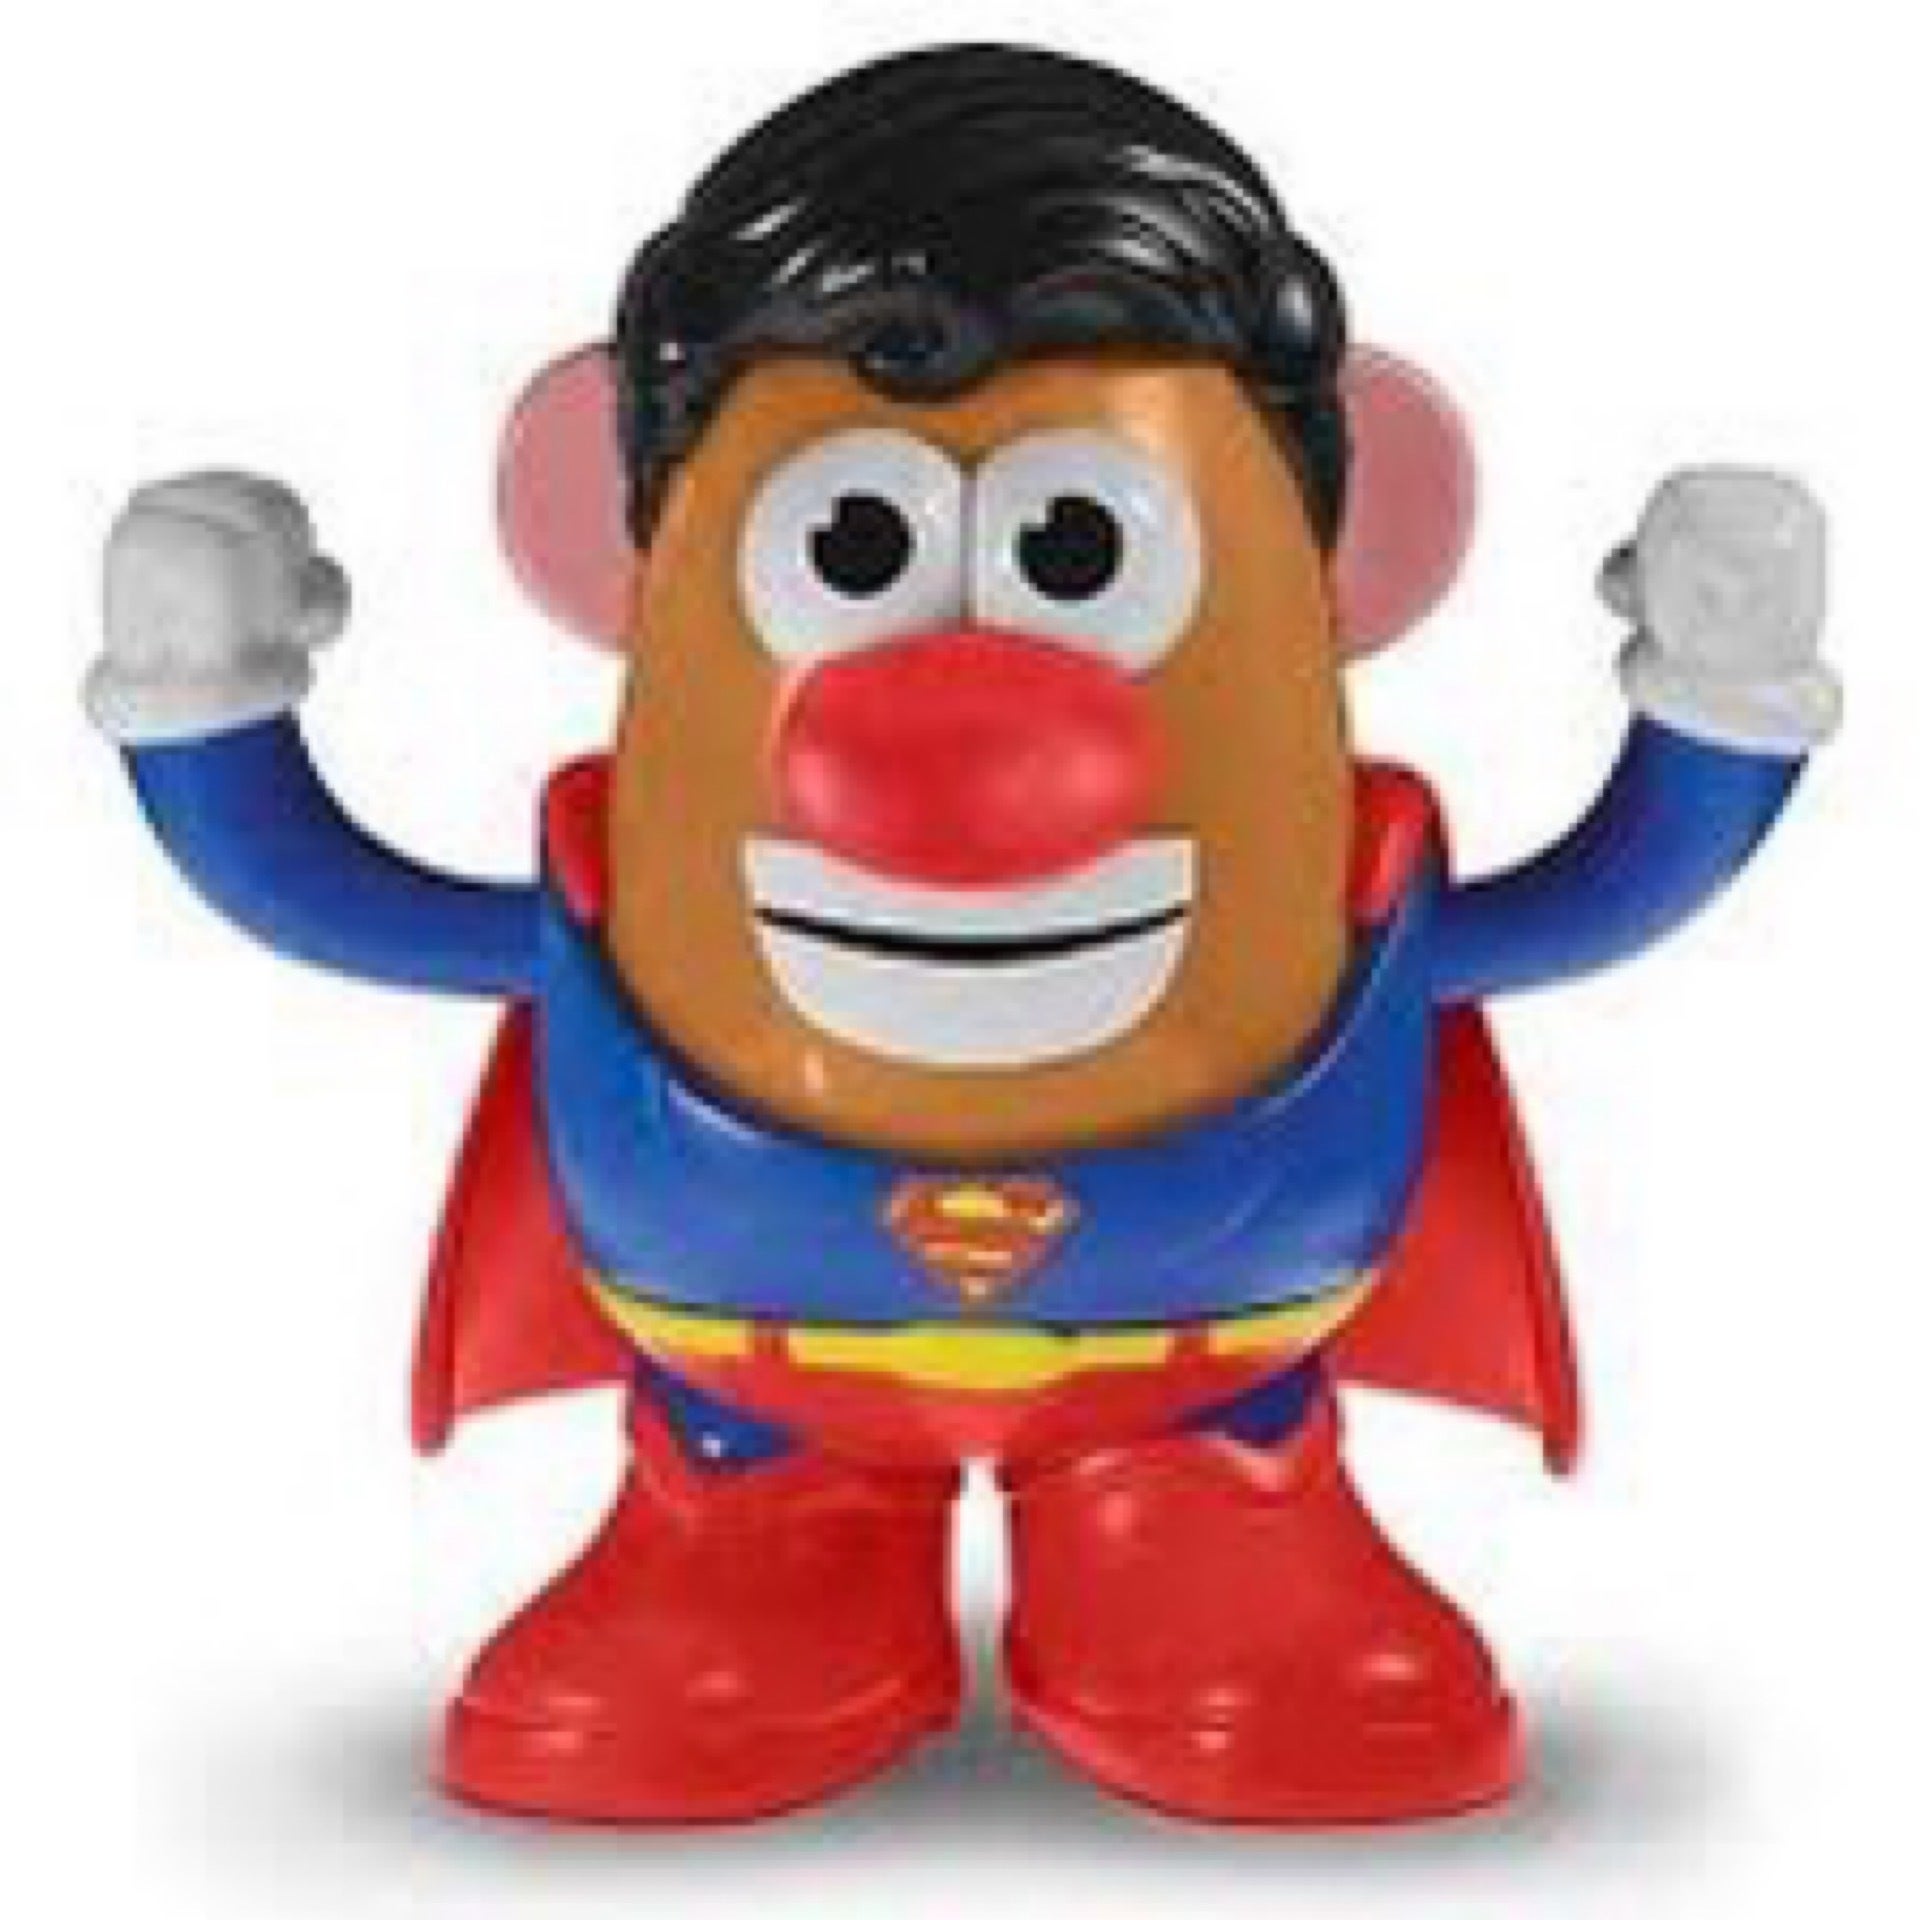 Playskool Toy Story Mr. Potato Head Figure